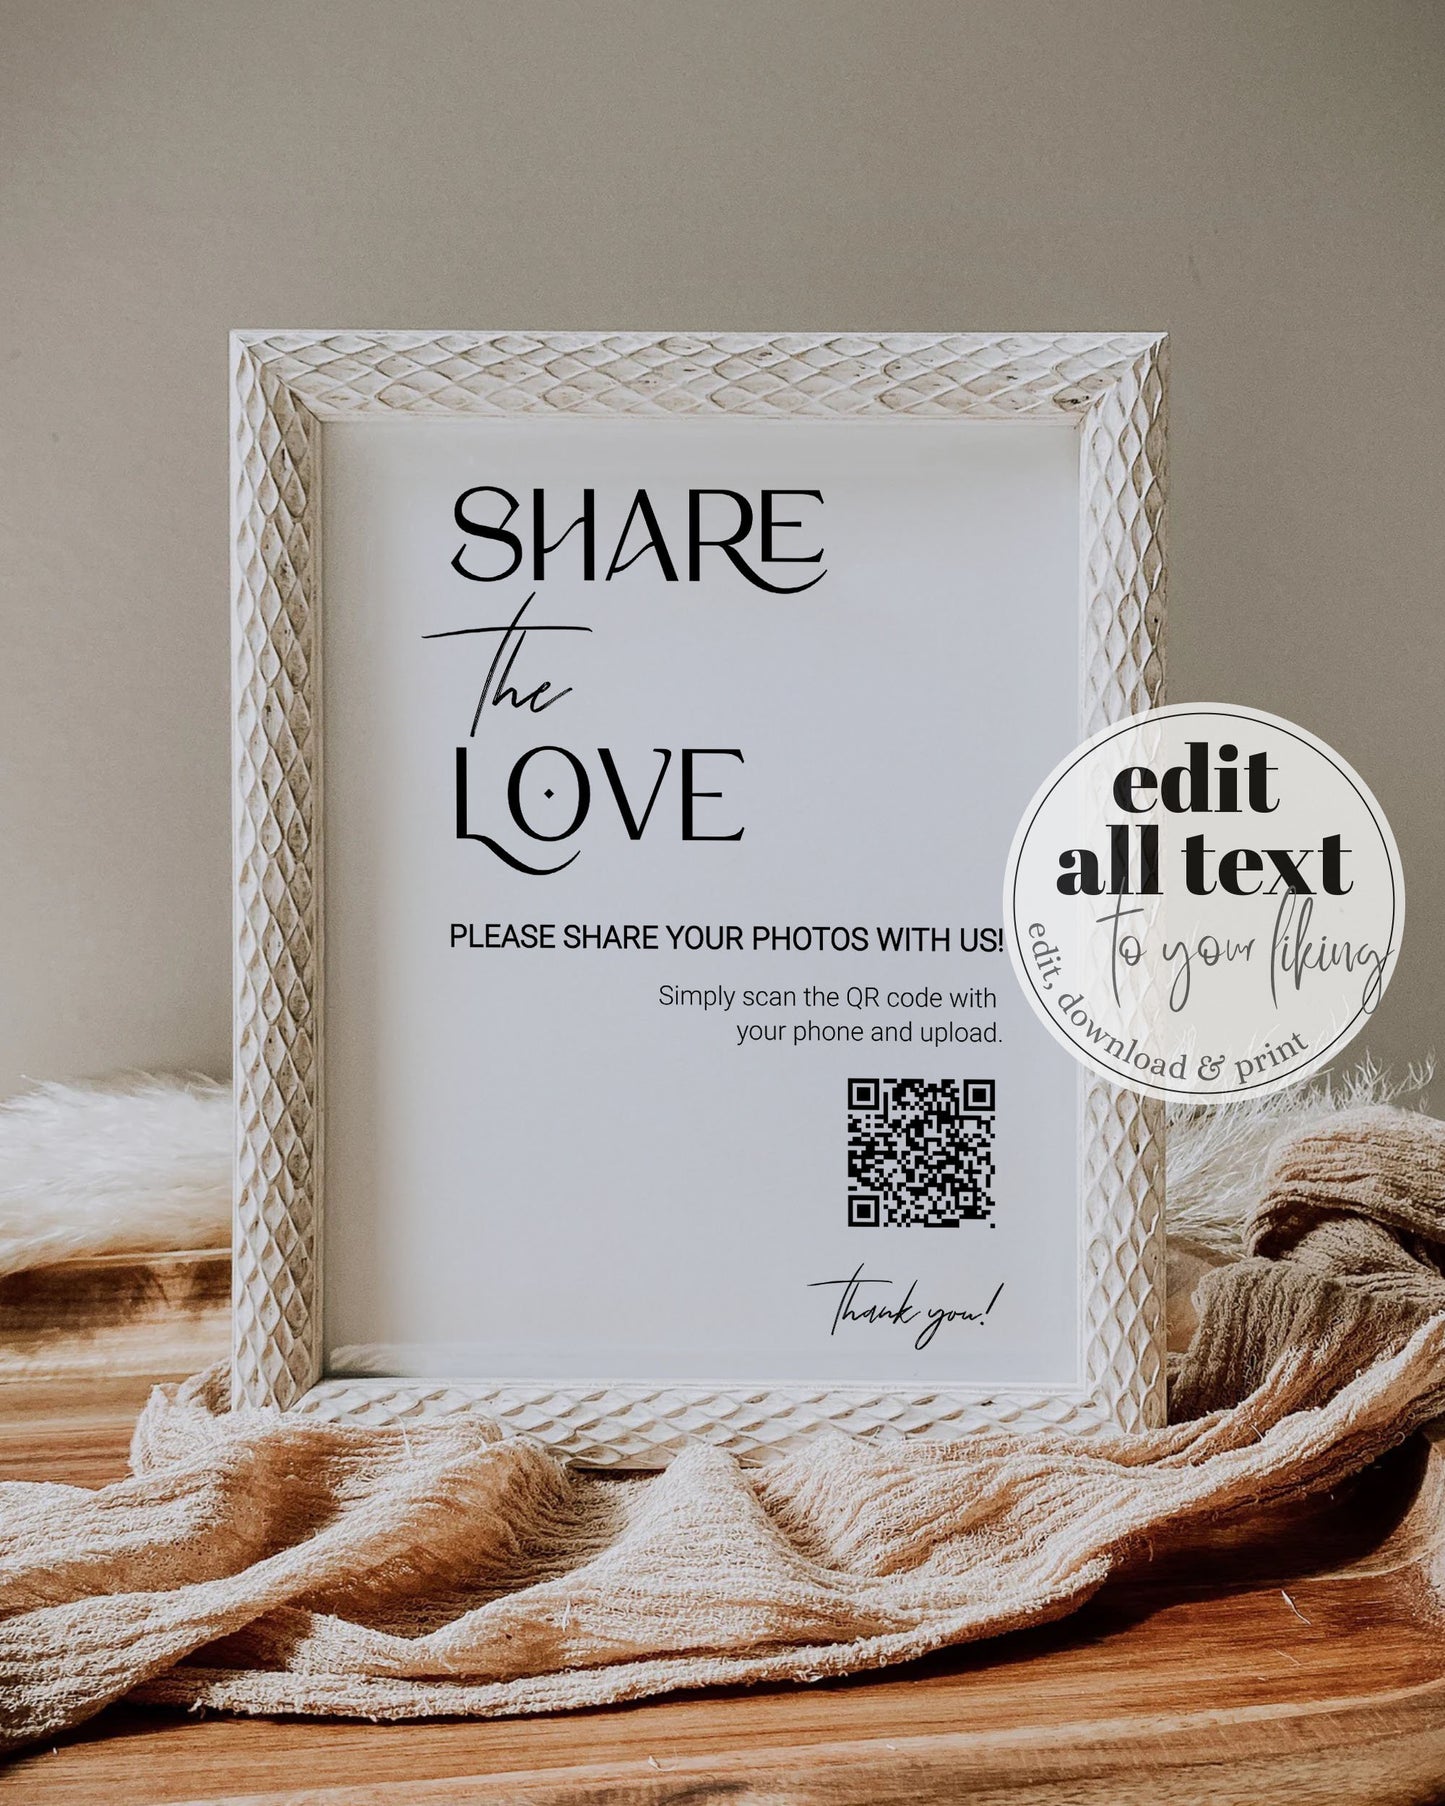 QR Code Sign "Capture the LOVE" for BOHO Wedding | Share the Love Wedding Decorations Sign | Share Photos Decor | Printable Template #023